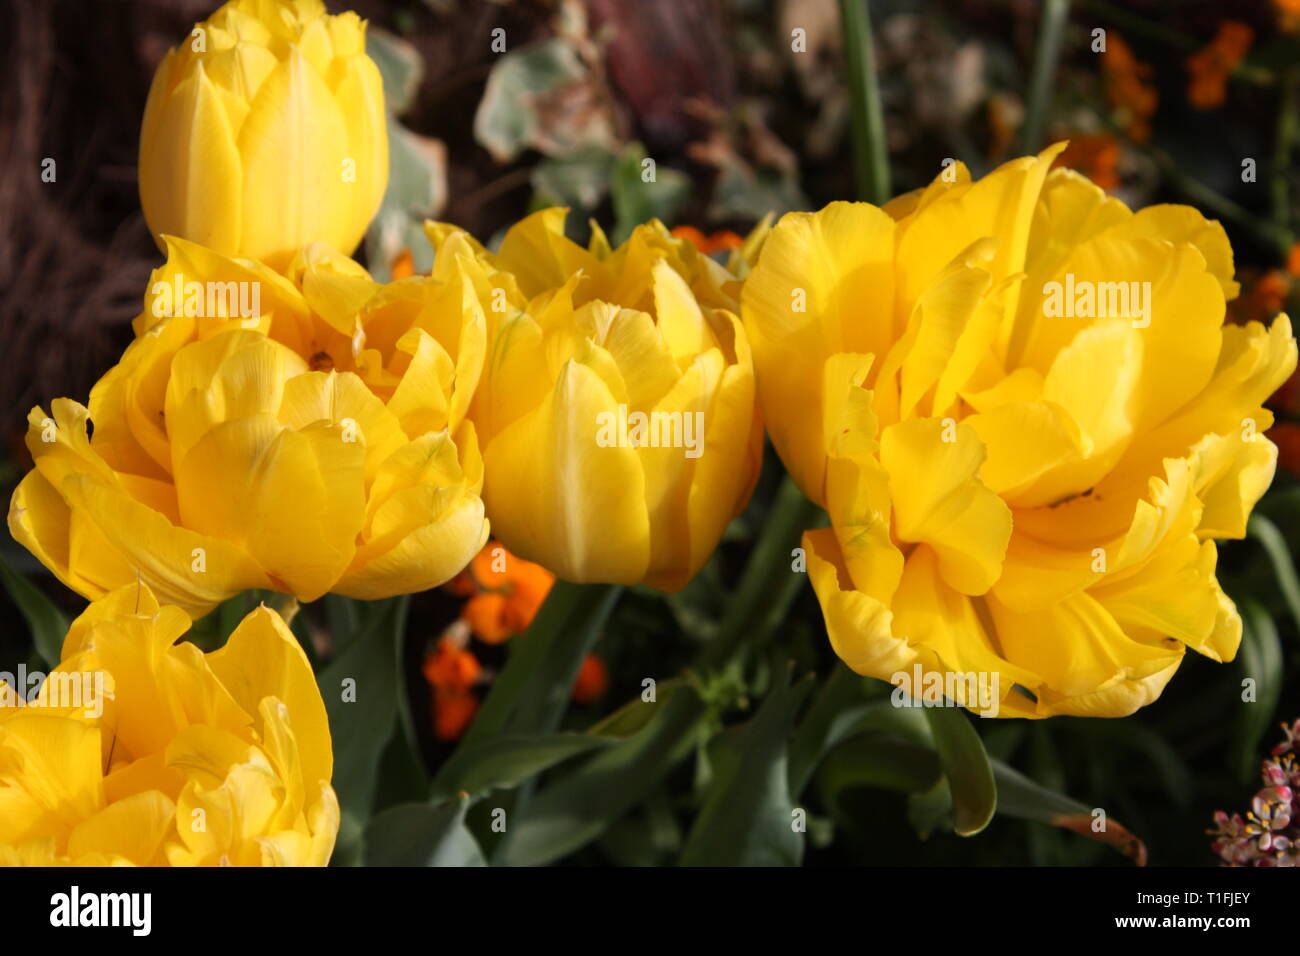 Tulips flowers in spring season Stock Photo